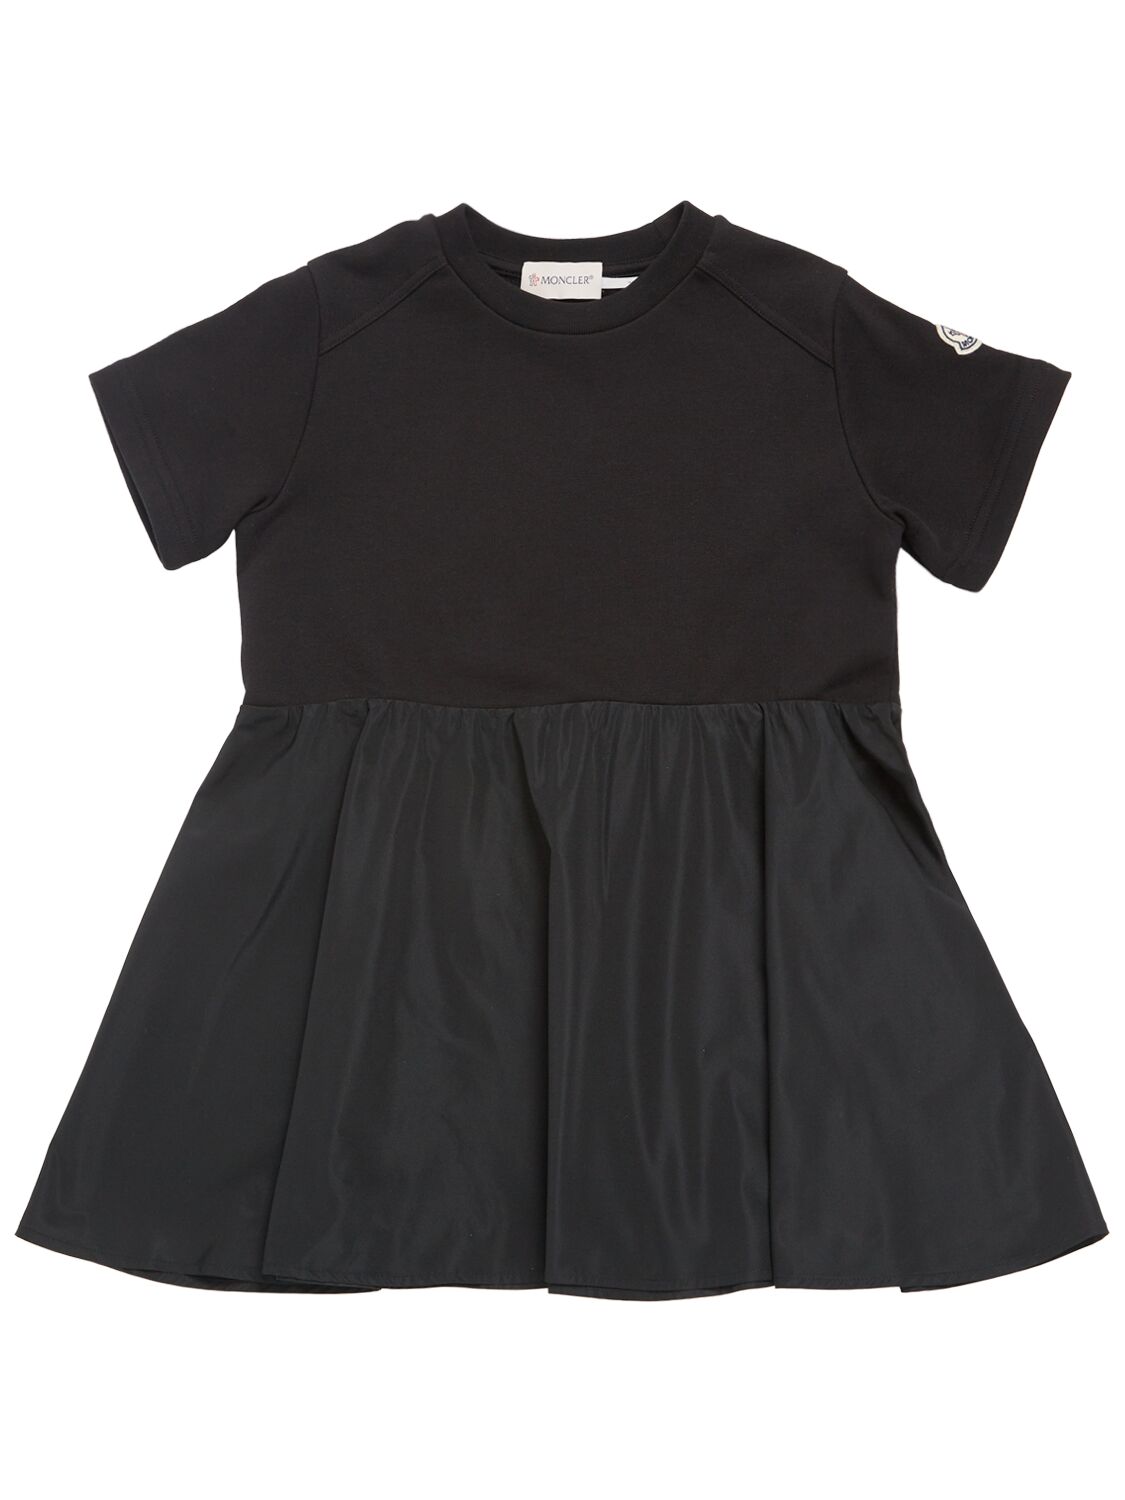 Moncler Kids' Cotton Fleece Dress In Black